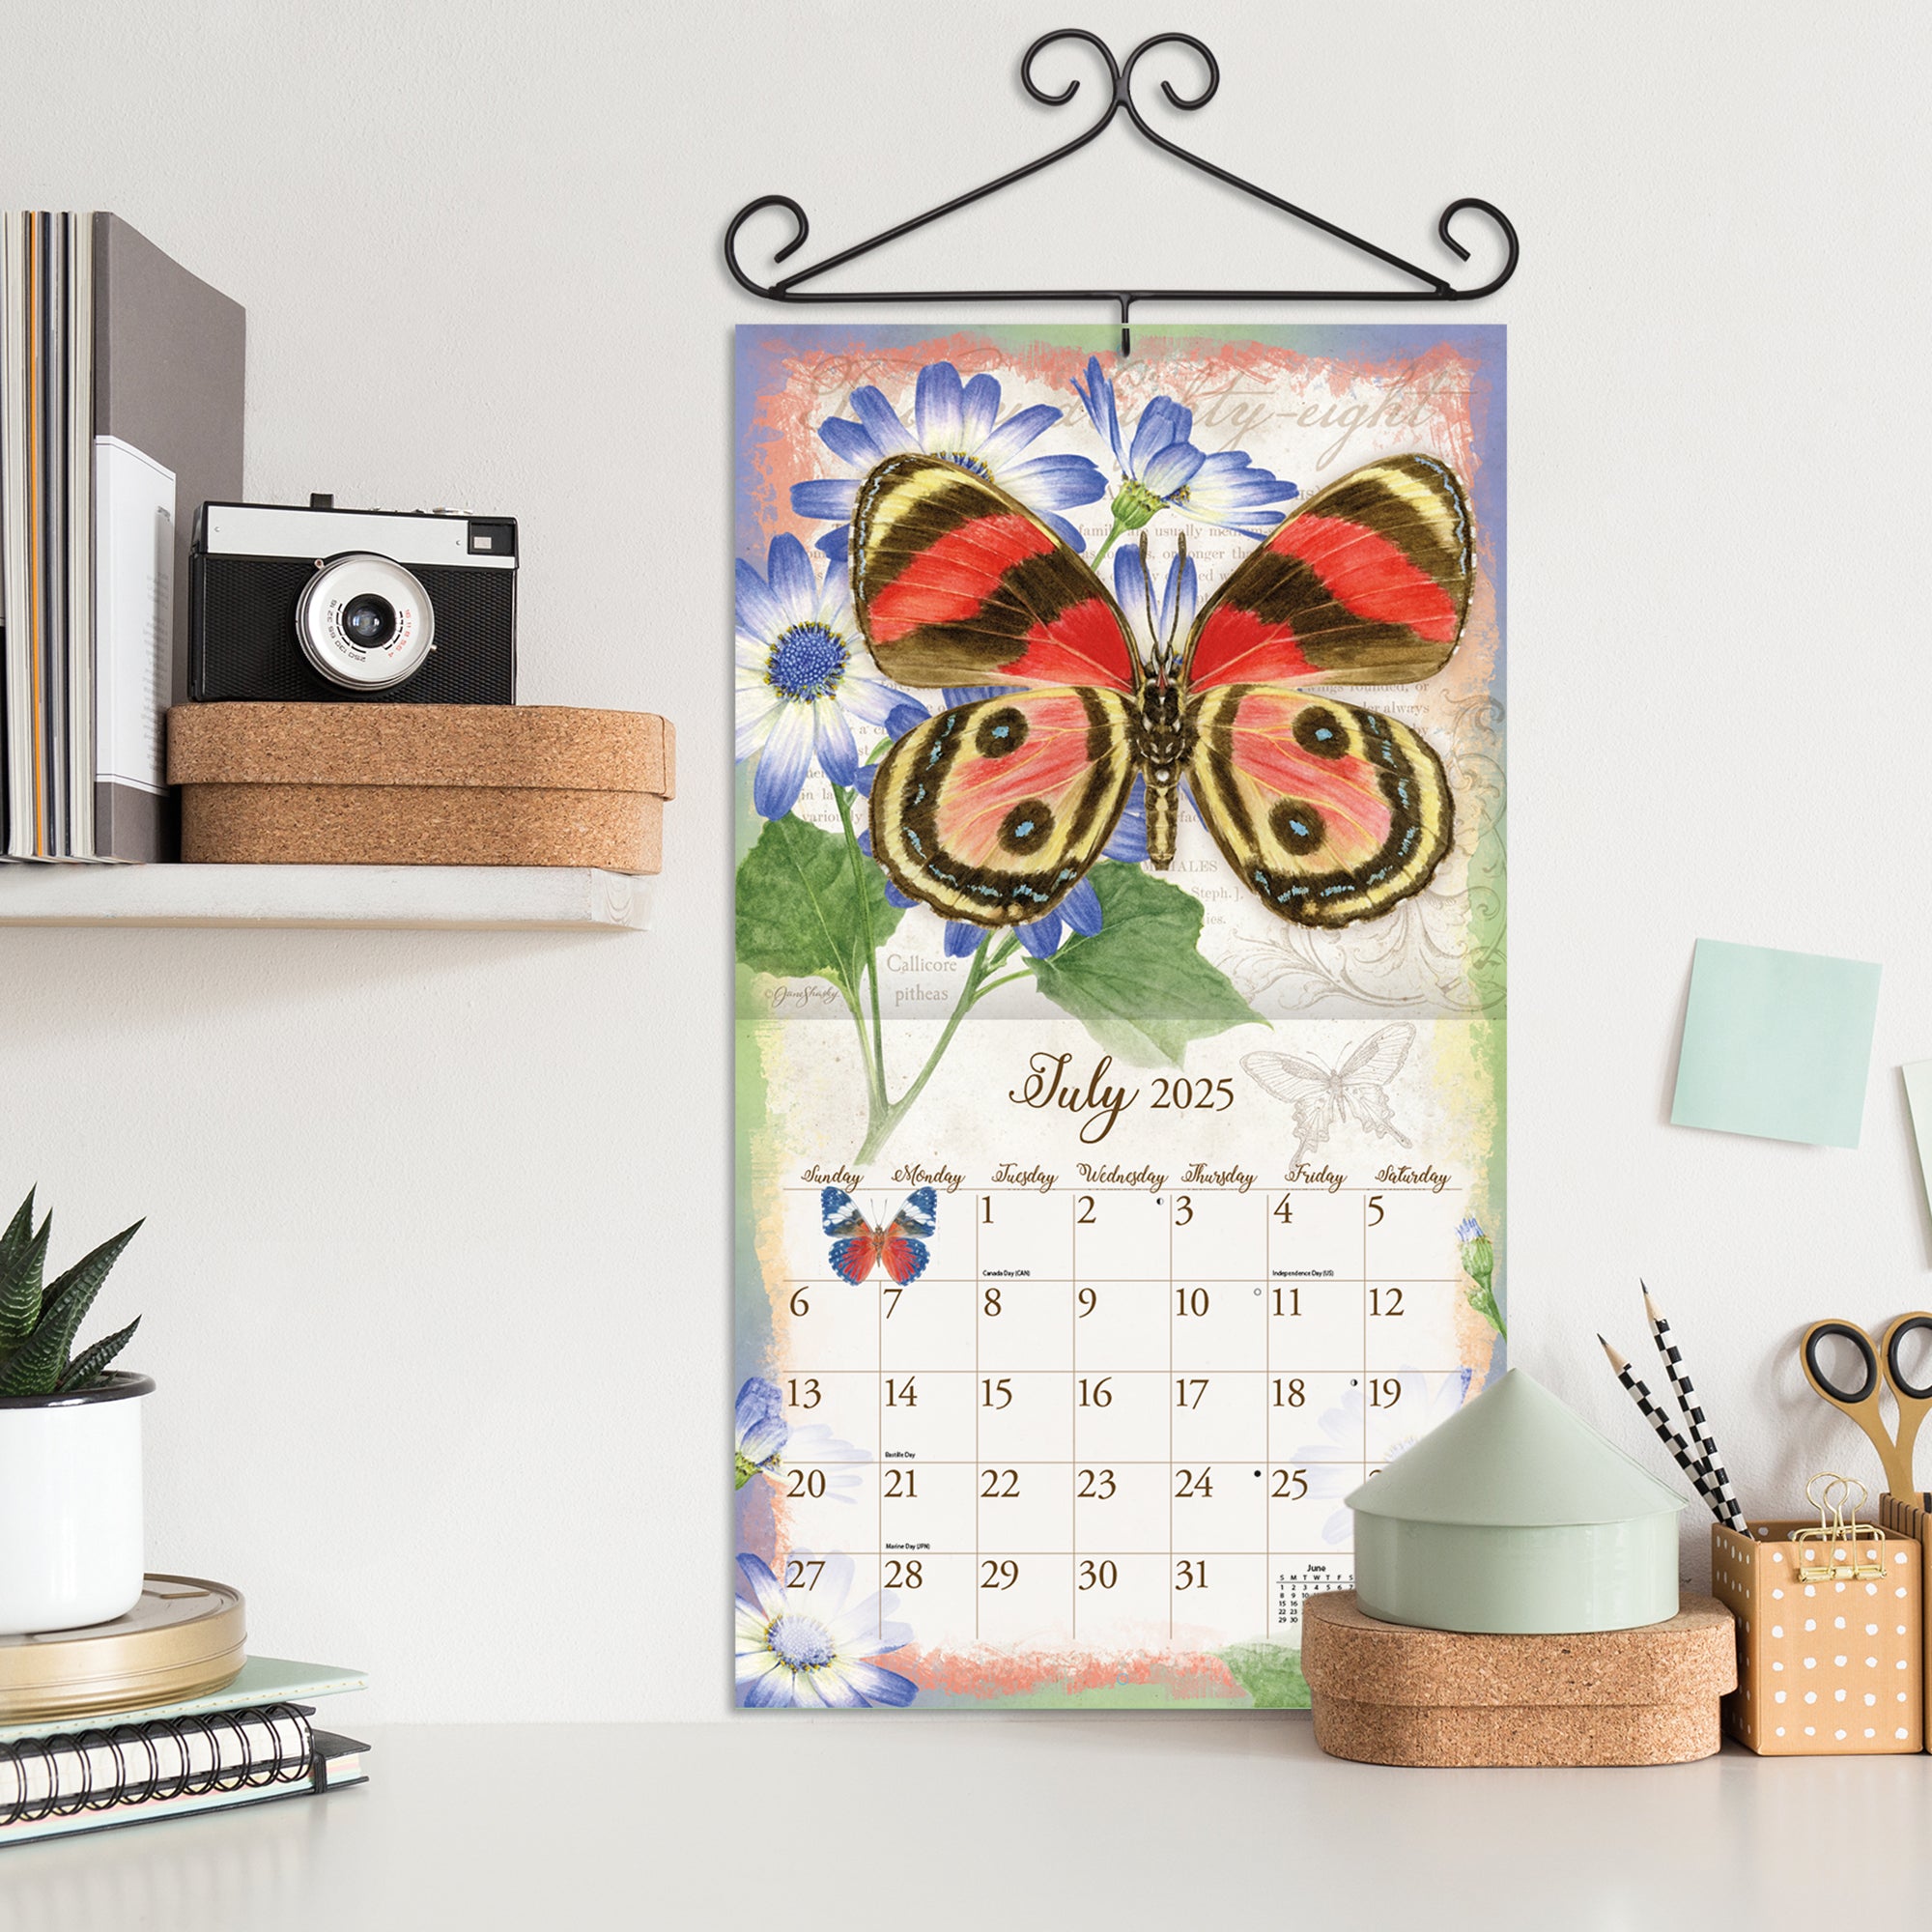 2025 Butterflies By Jane Shasky - LANG Deluxe Wall Calendar